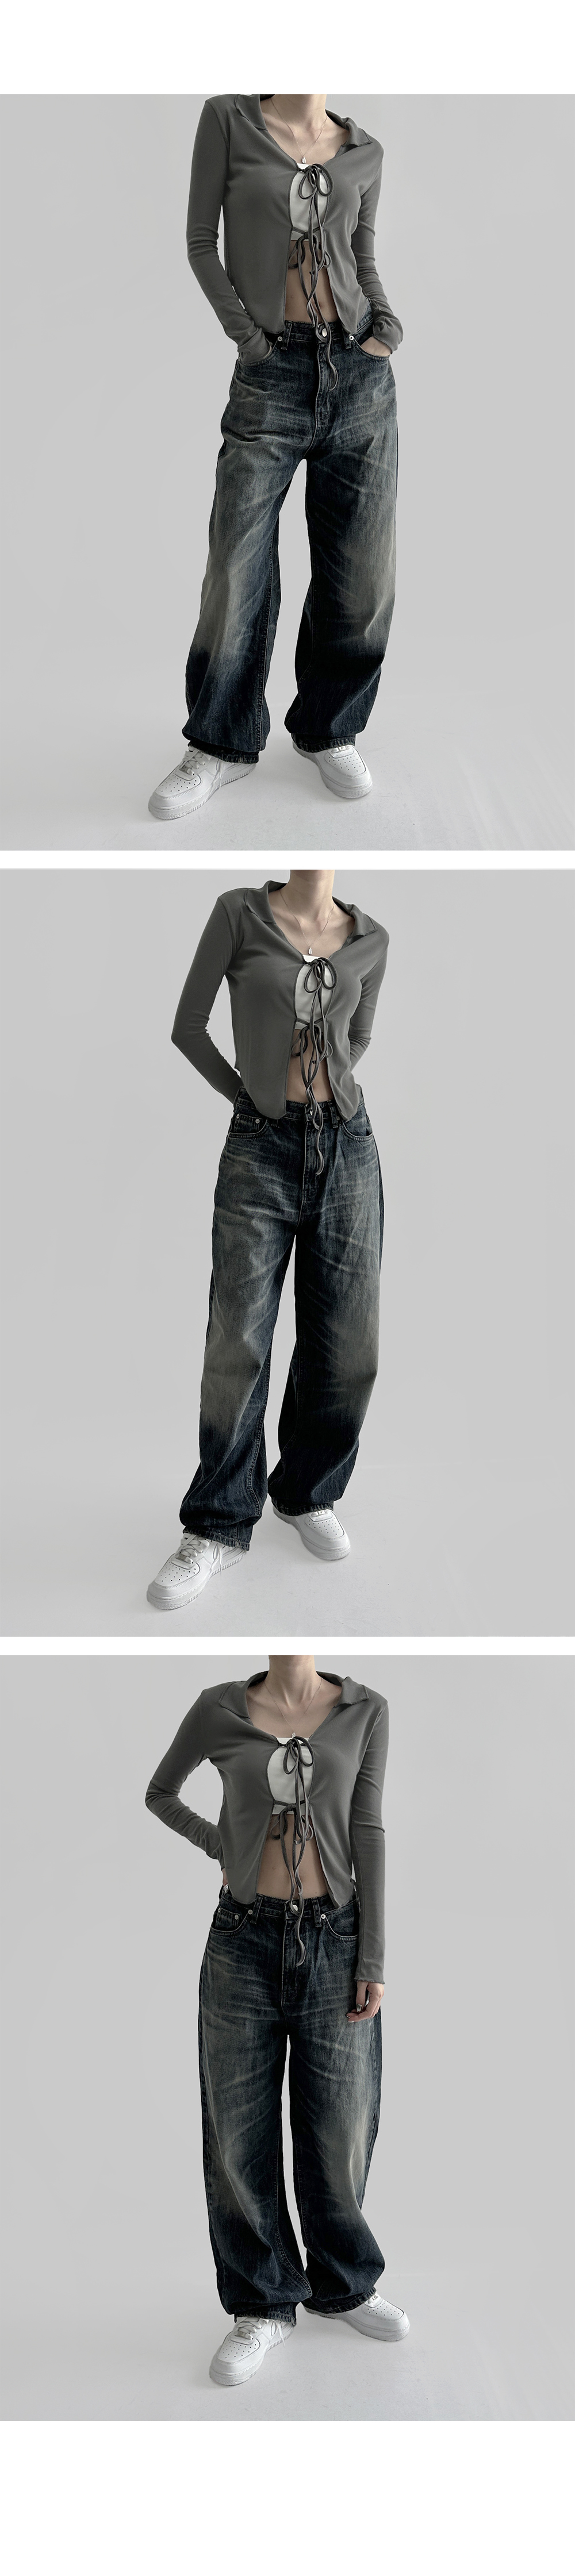 suspenders skirt/pants charcoal color image-S2L4